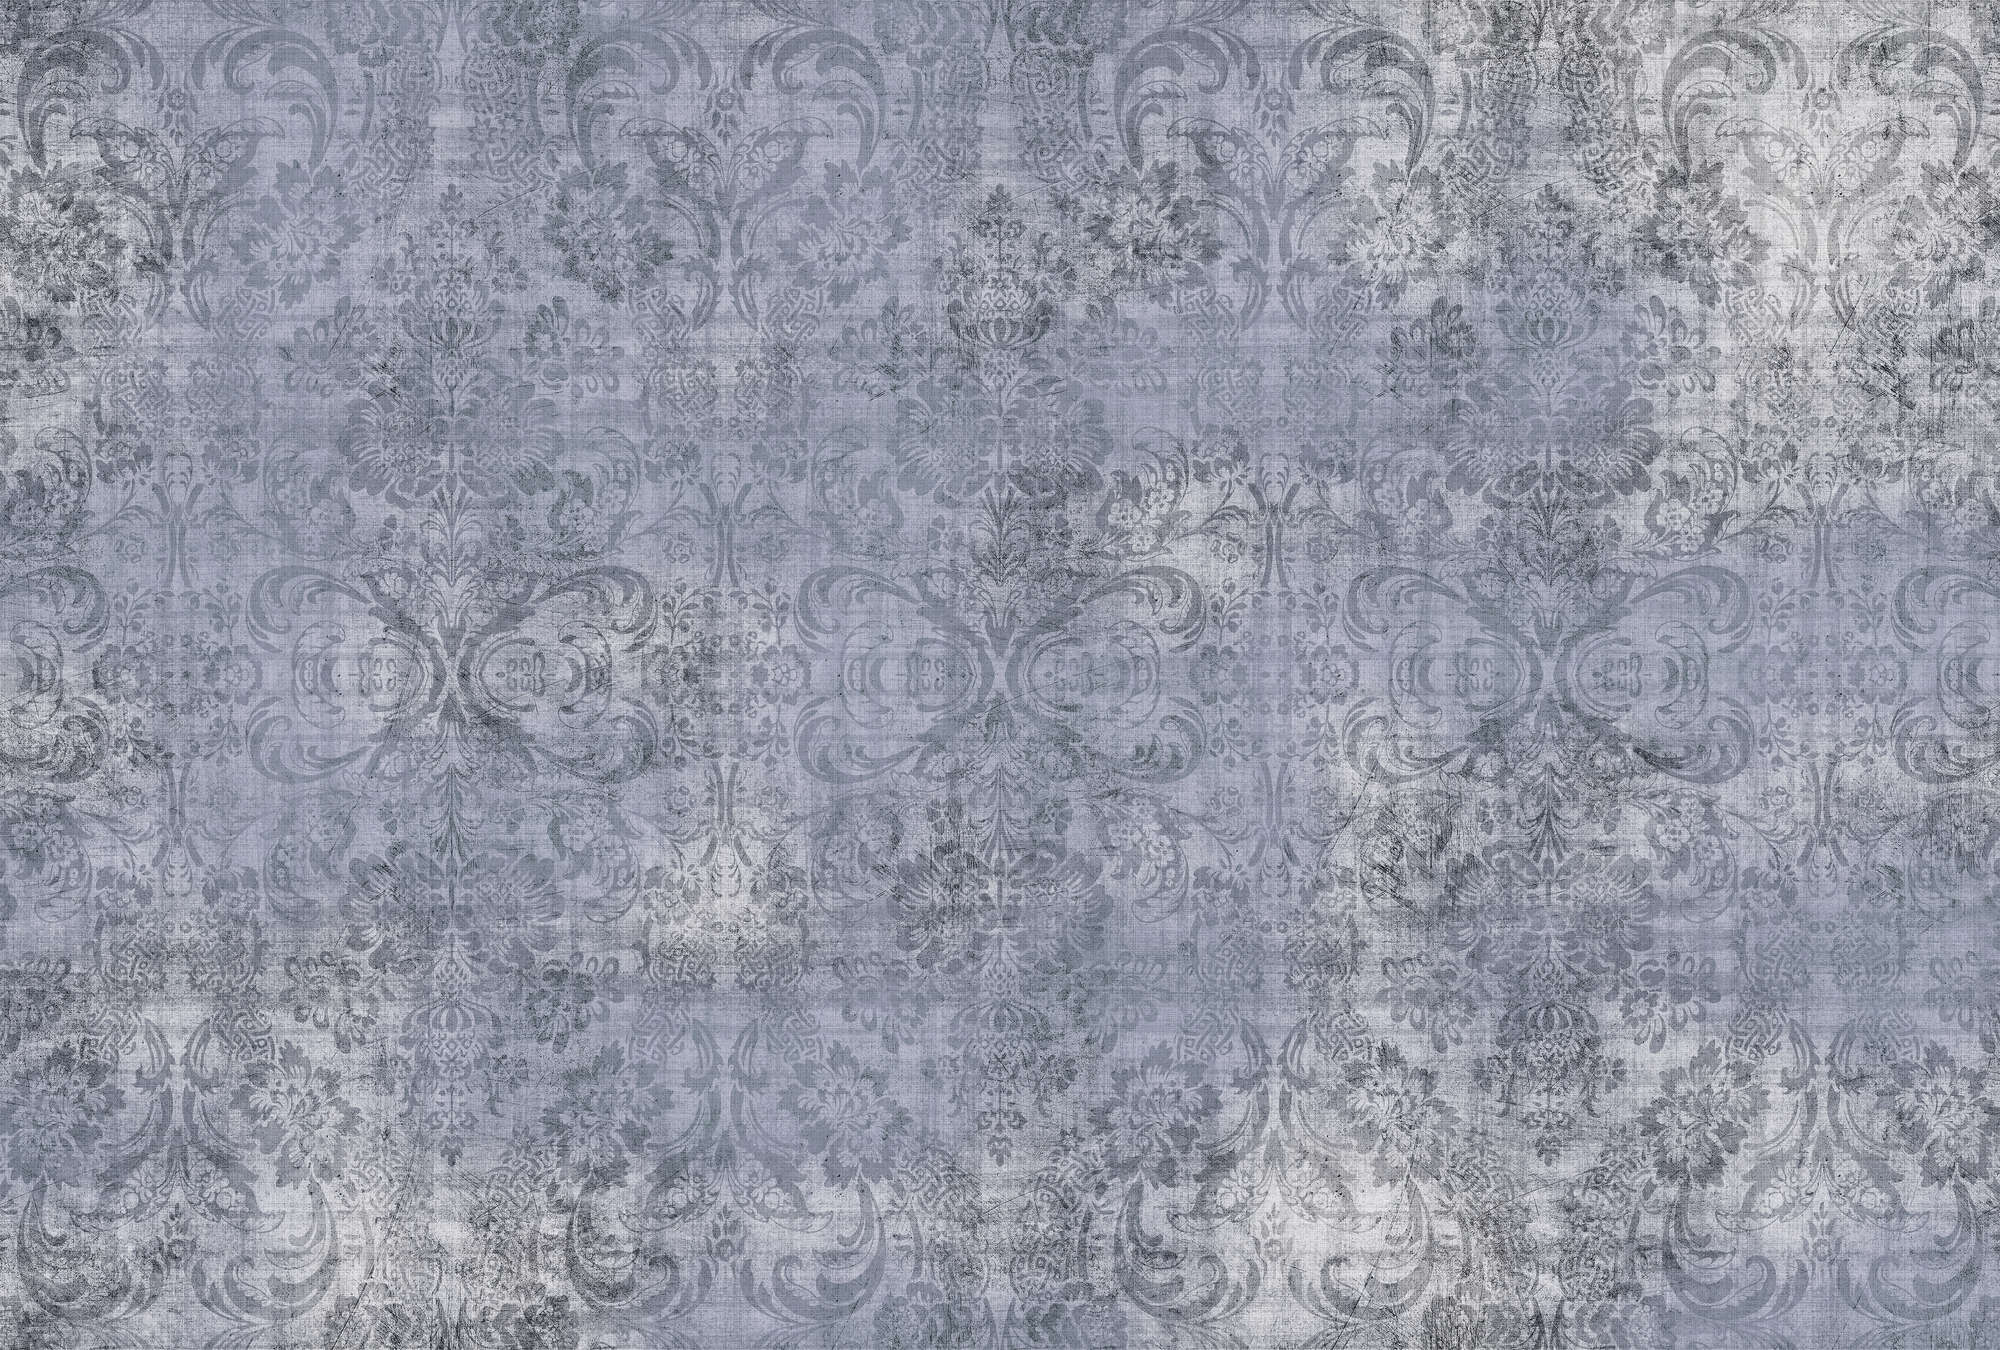             Old damask 3 - Carta da parati in lino naturale struttura ornamenti screziati blu - Vello liscio blu | madreperla
        